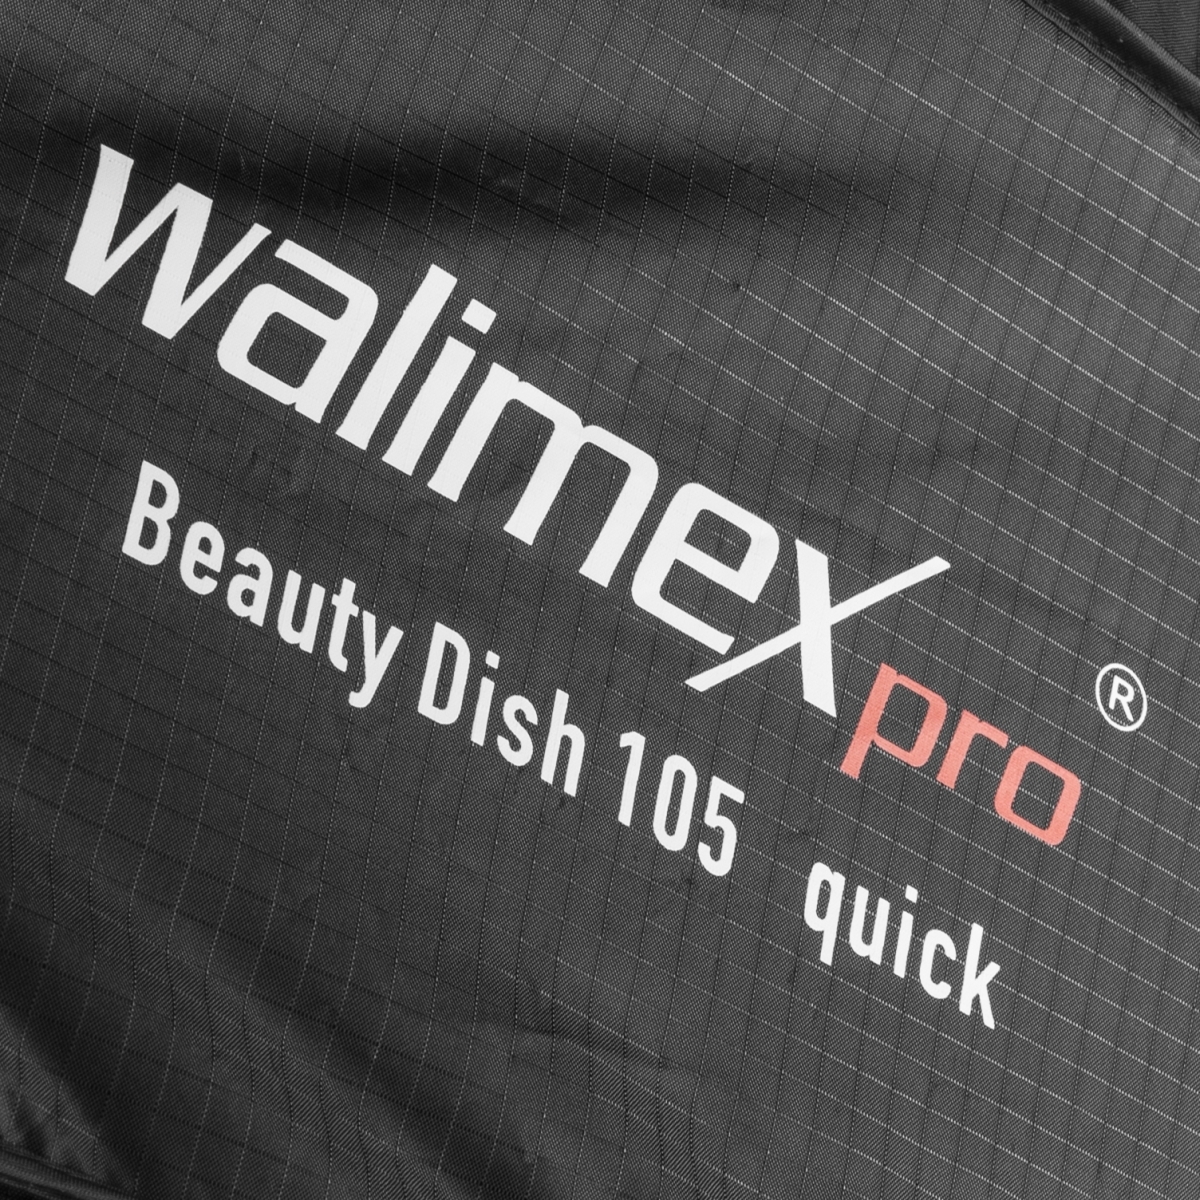 Walimex pro Studio Line Beauty Dish Softbox QA105 mit Softboxadapter Hensel EH/Richter